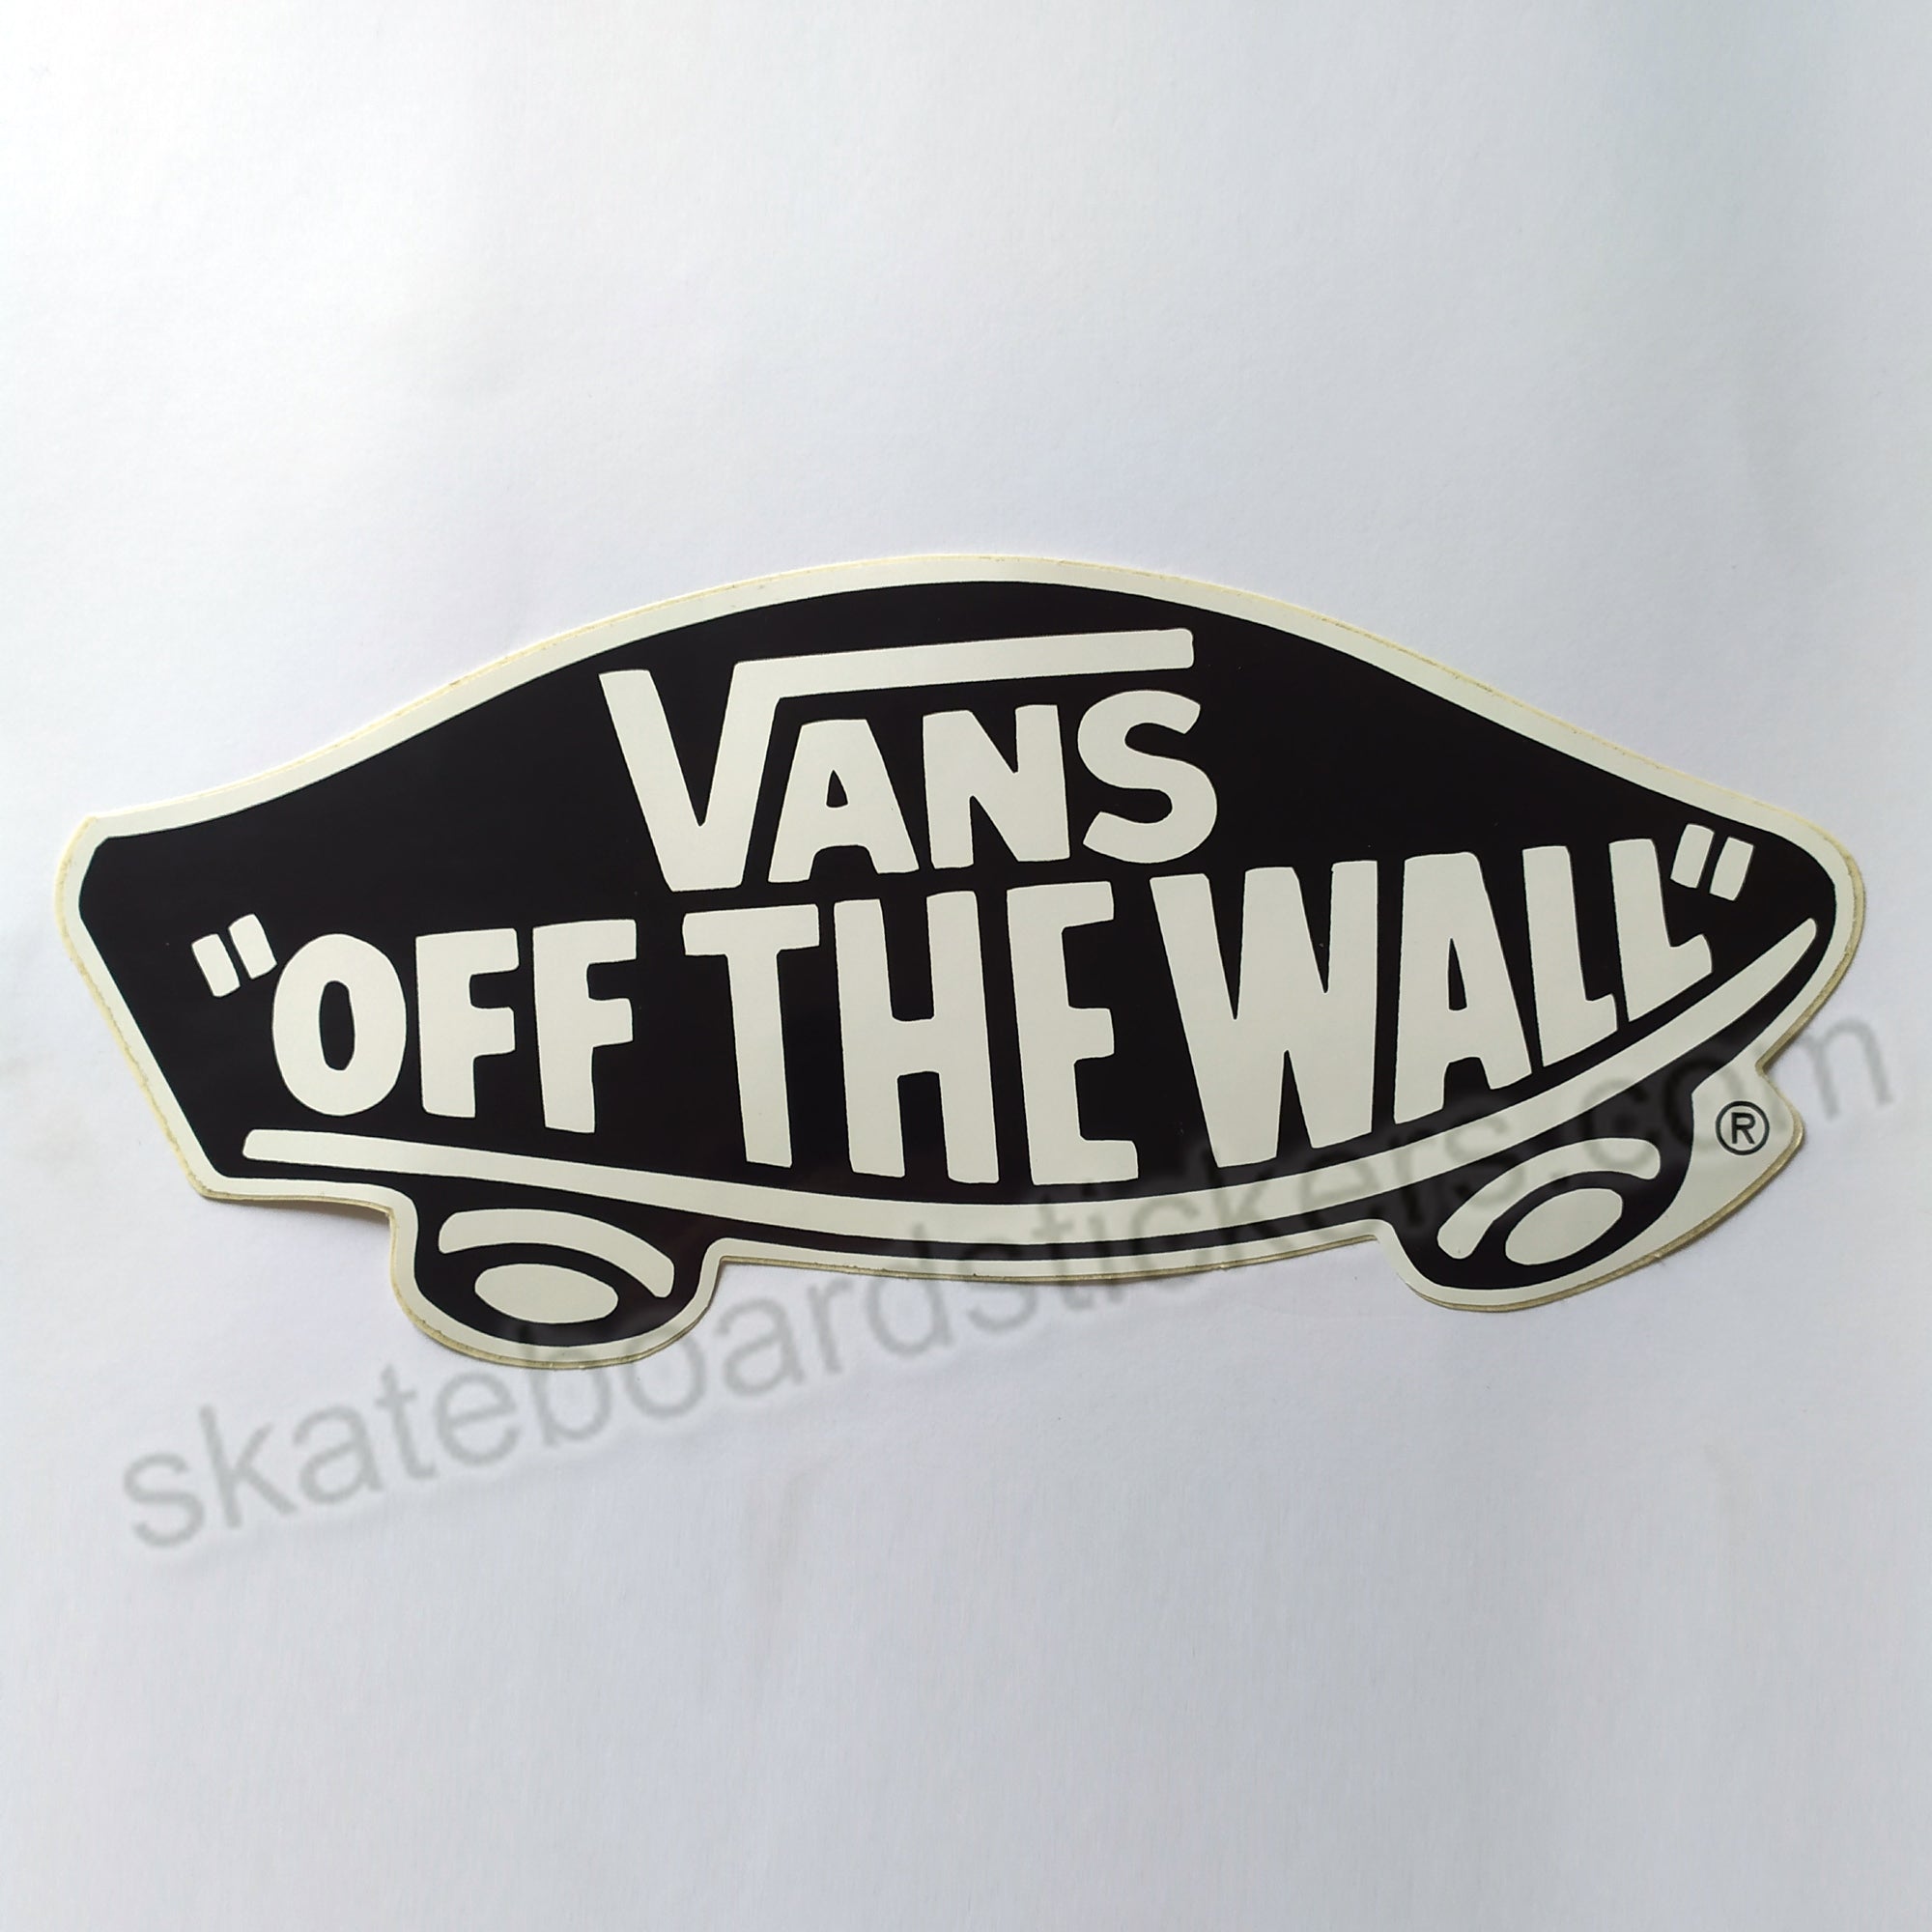 Vans Shoes "Off The Wall " Skateboard Sticker - Large - SkateboardStickers.com